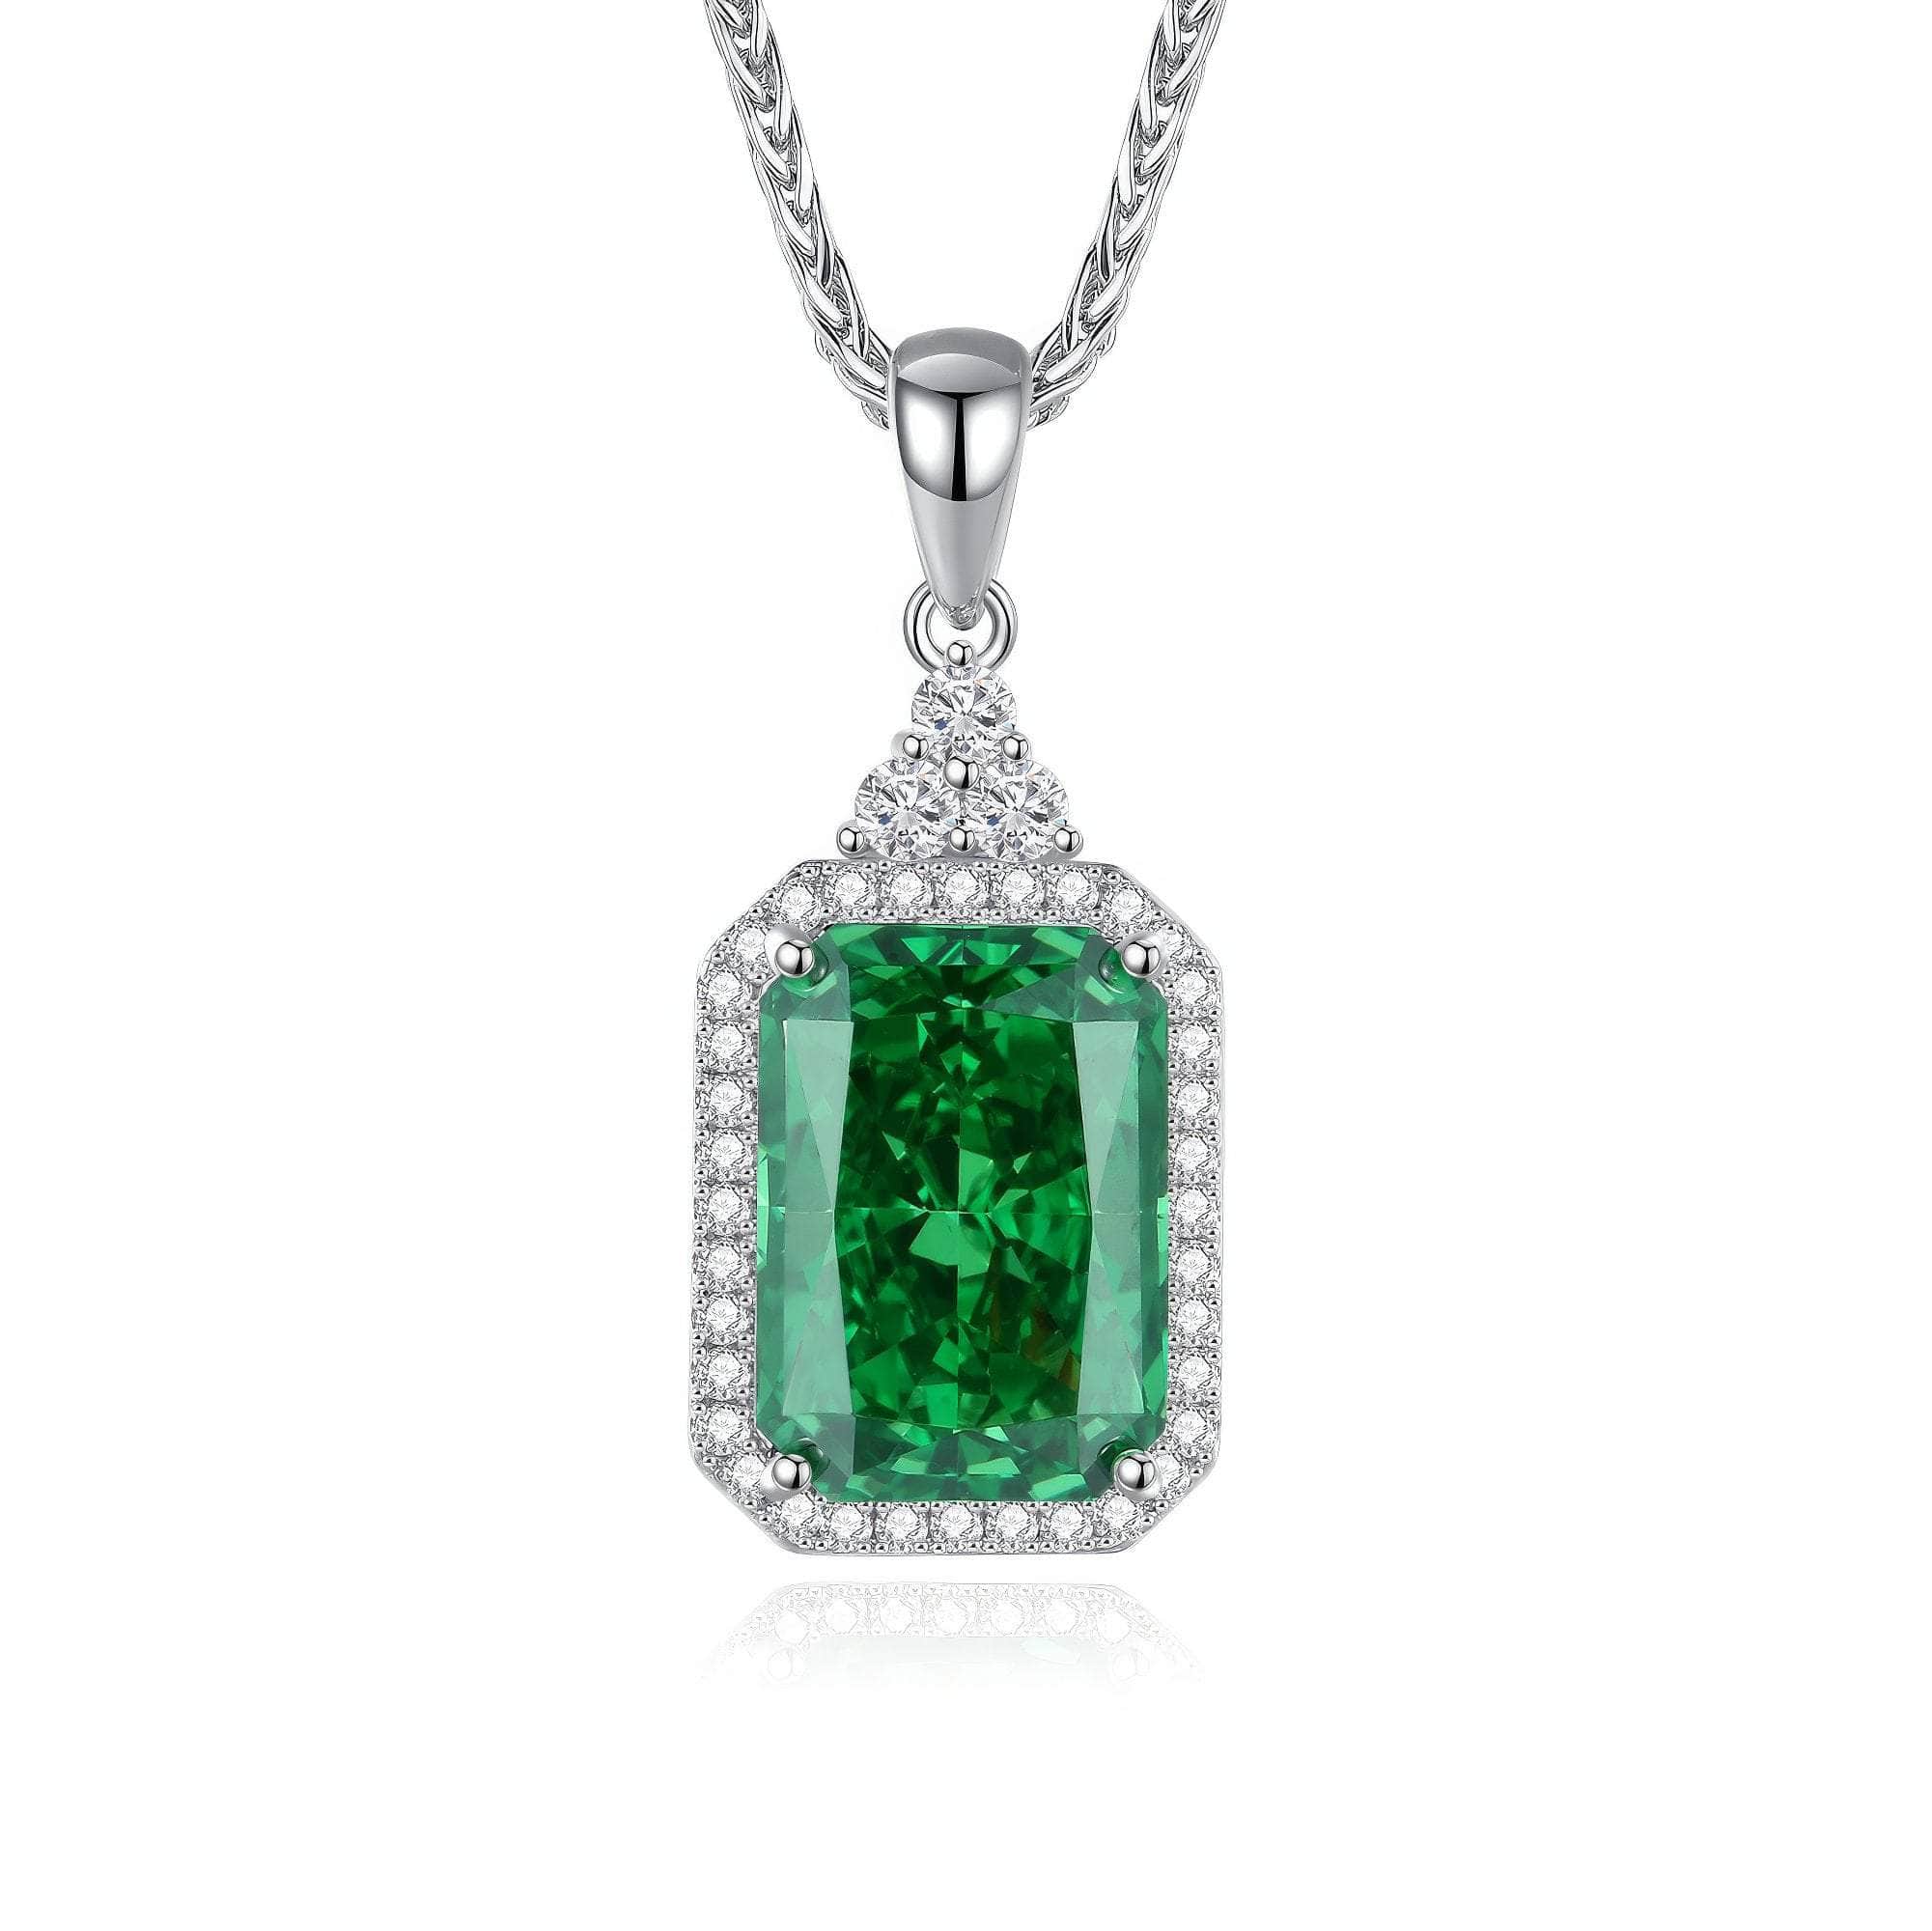 14k White Gold Paved Crystal Prong-Setting Blue Gemstone Necklace Emerald